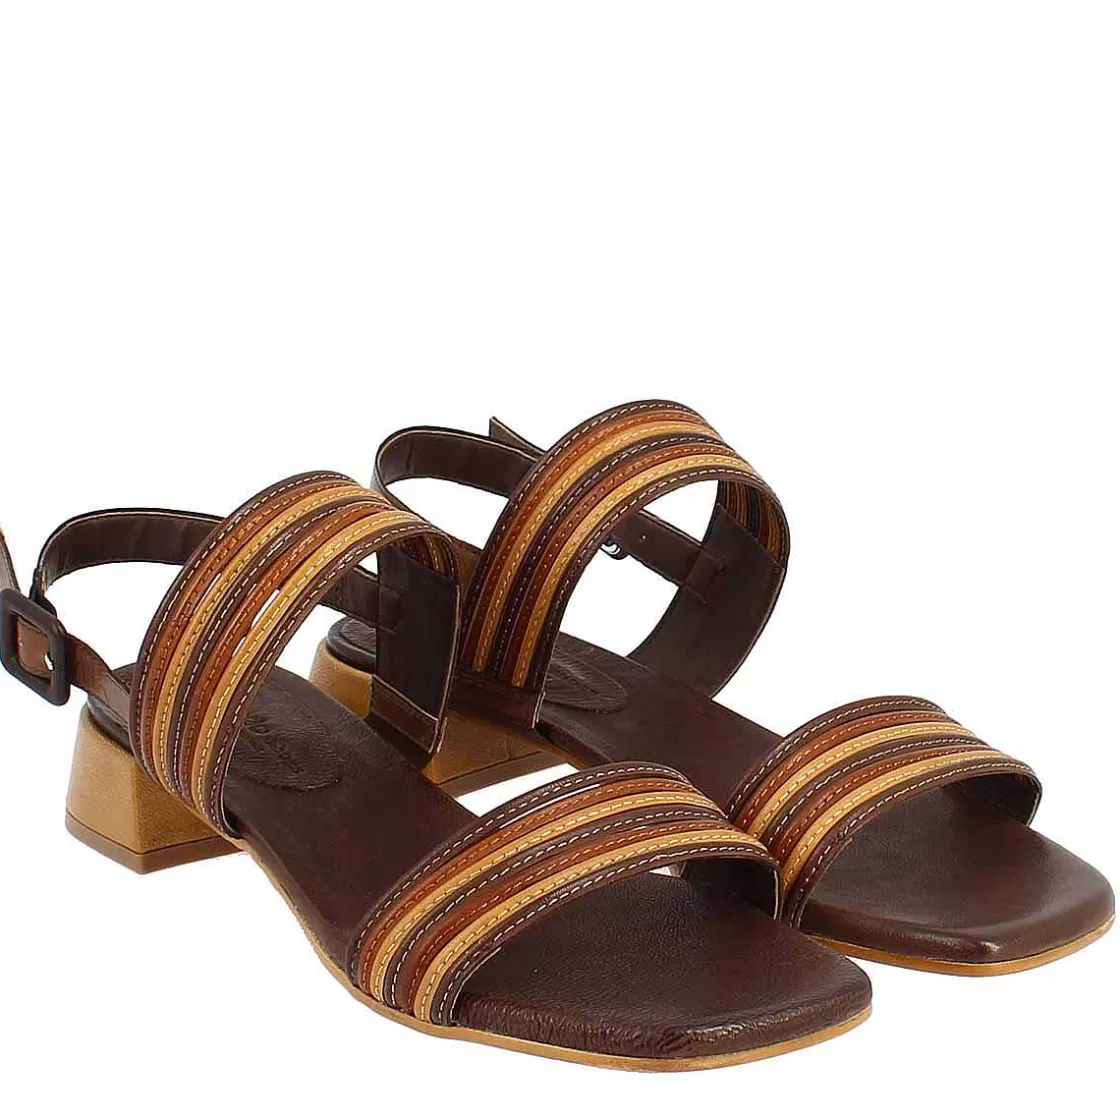 Leonardo Handmade Women'S Slingback Sandals In Brown, Wood And Beige Leather. Flash Sale